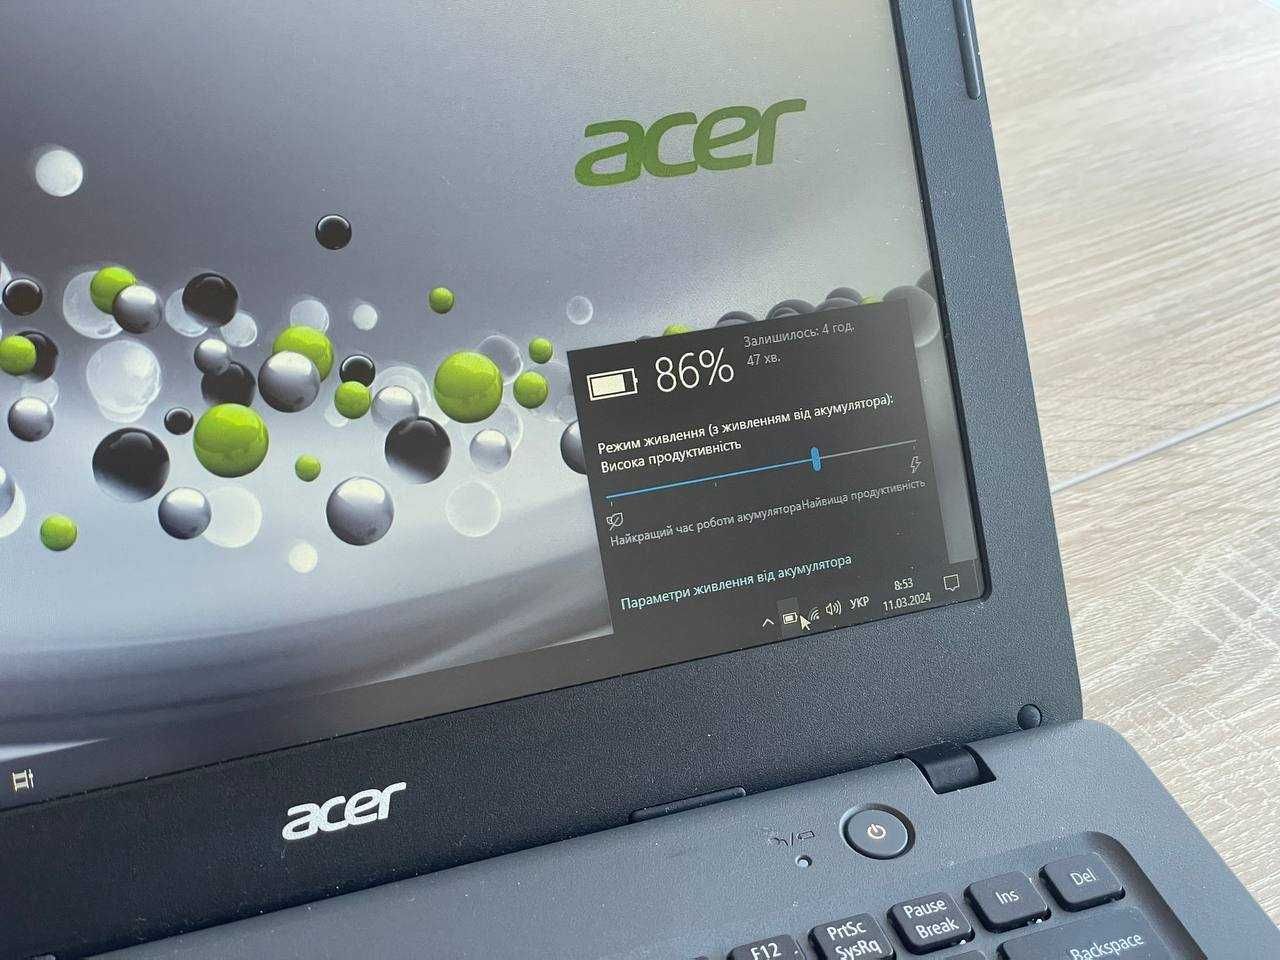 Acer CloudBook Windows 10 2Gb+32Gb 11.6"